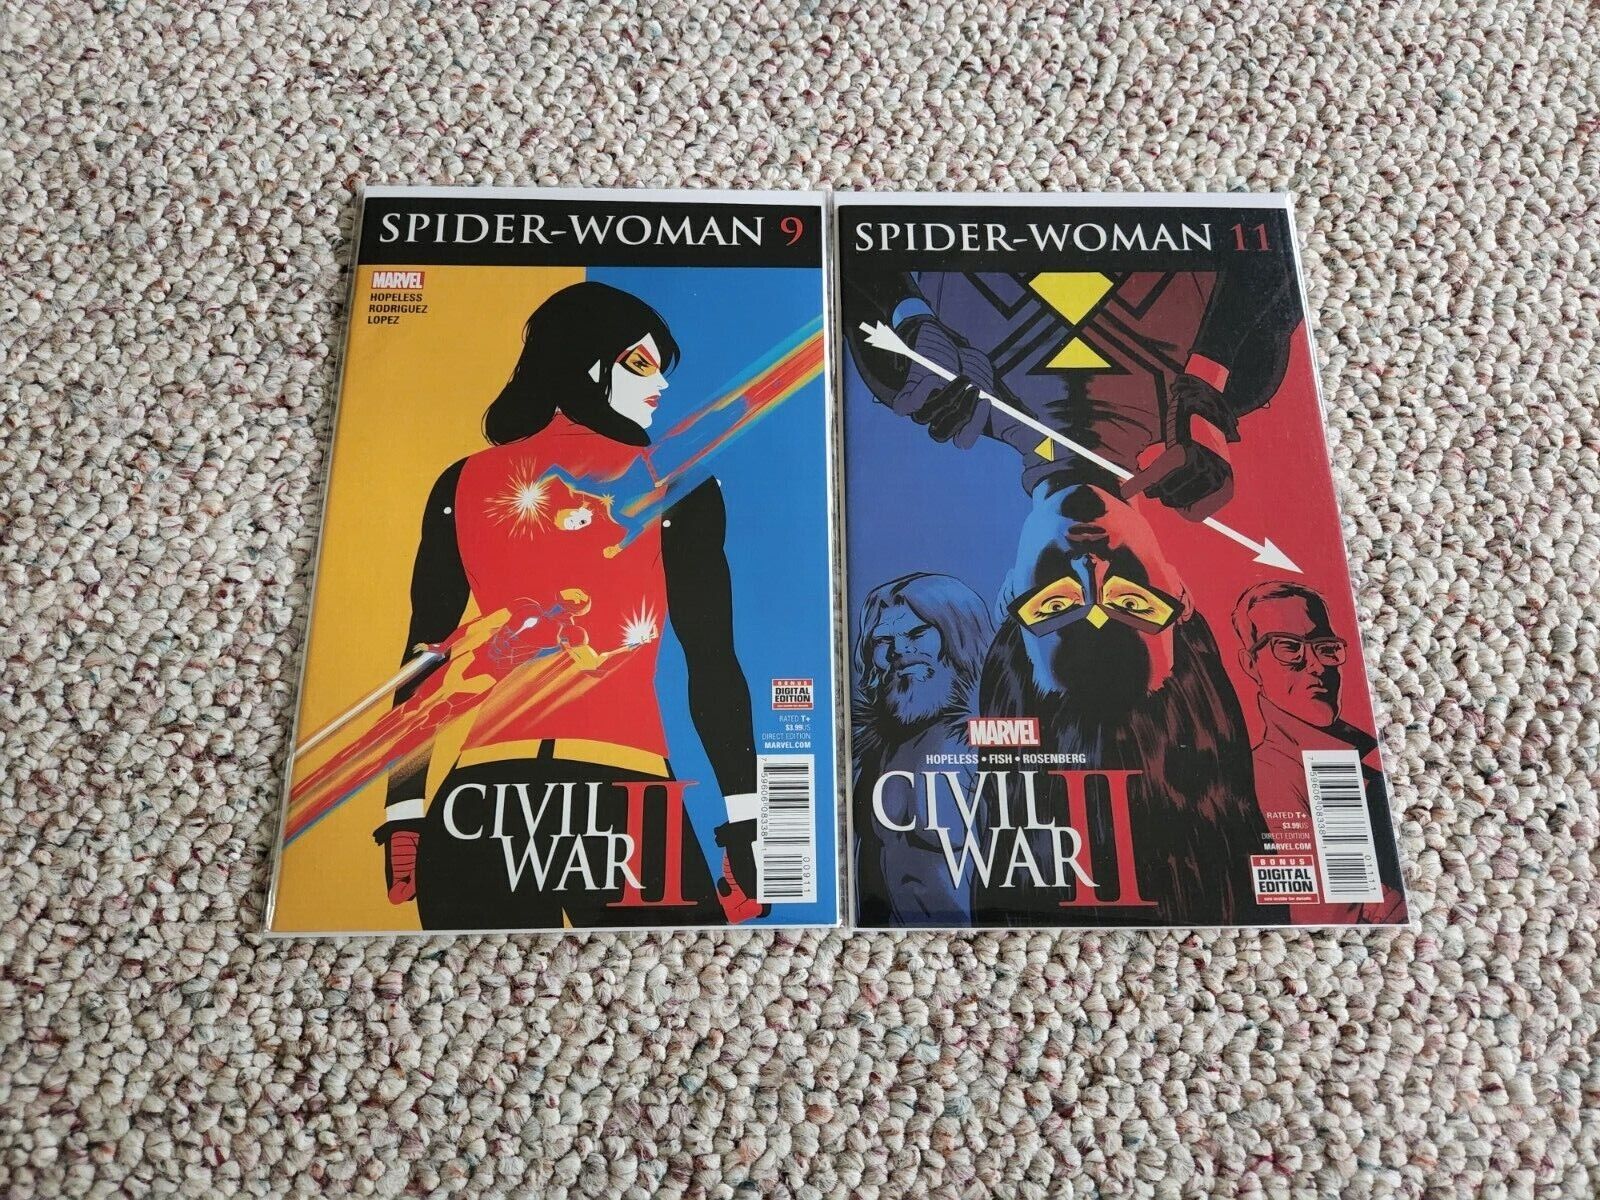 Civil War II Spider-Woman Comics #9 and 11 - Never been read